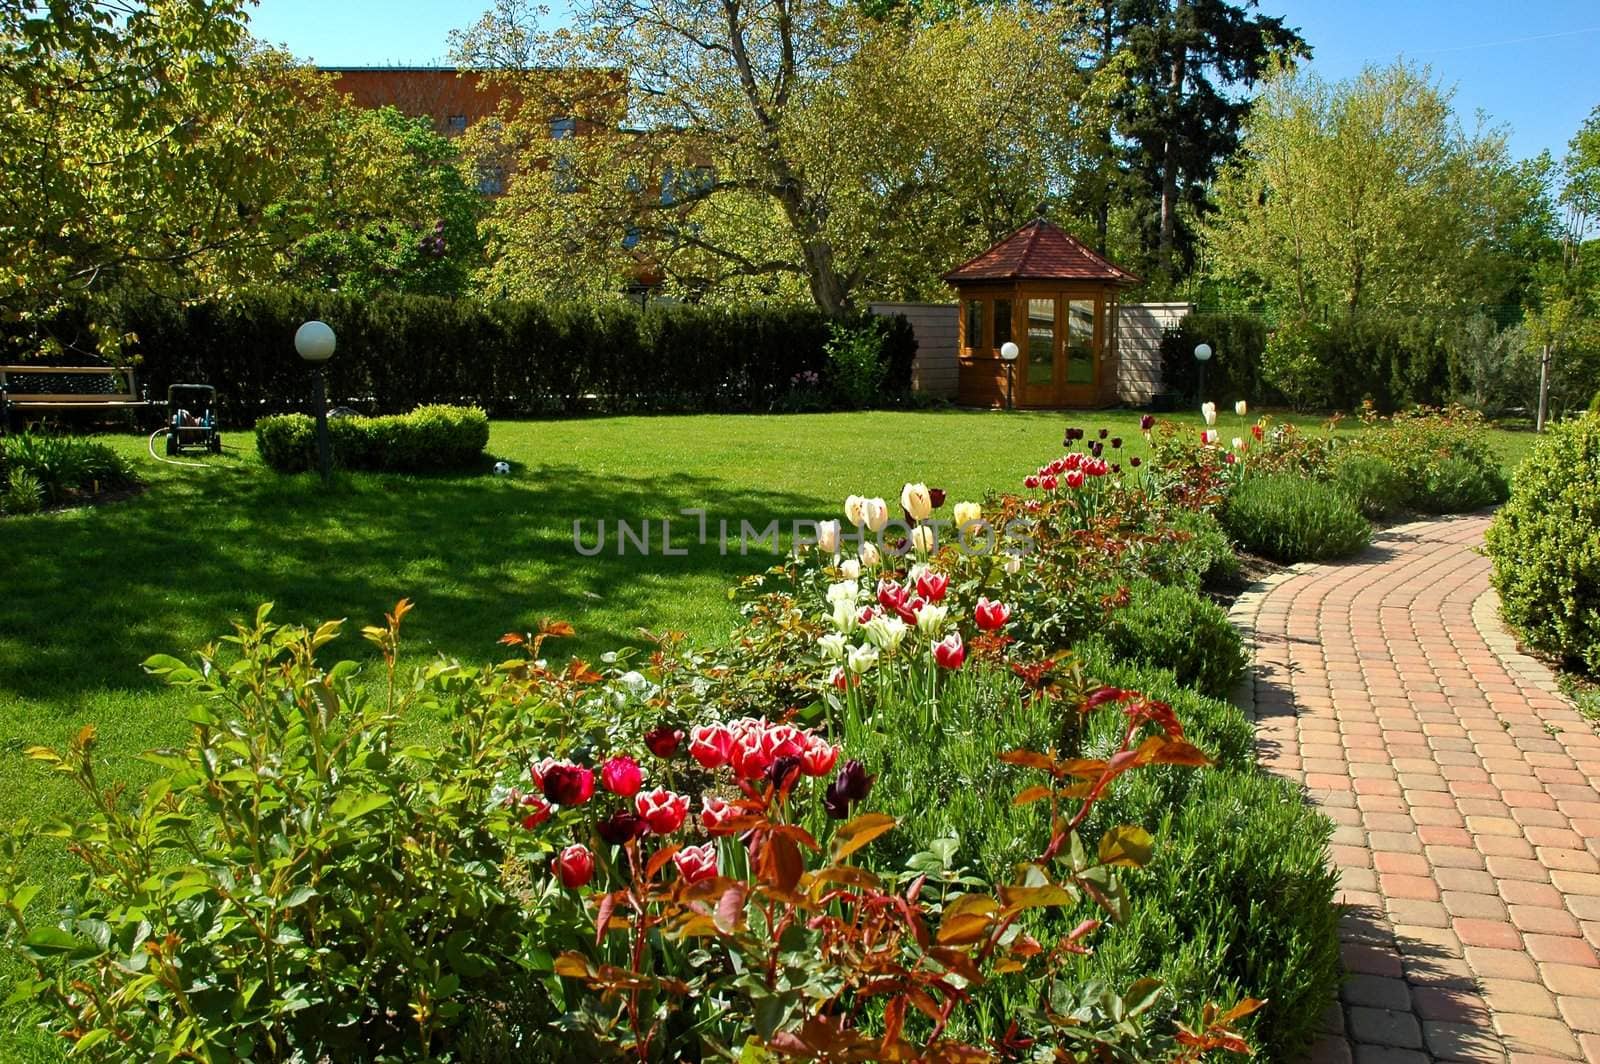 Garden with tulips, gazebo and path